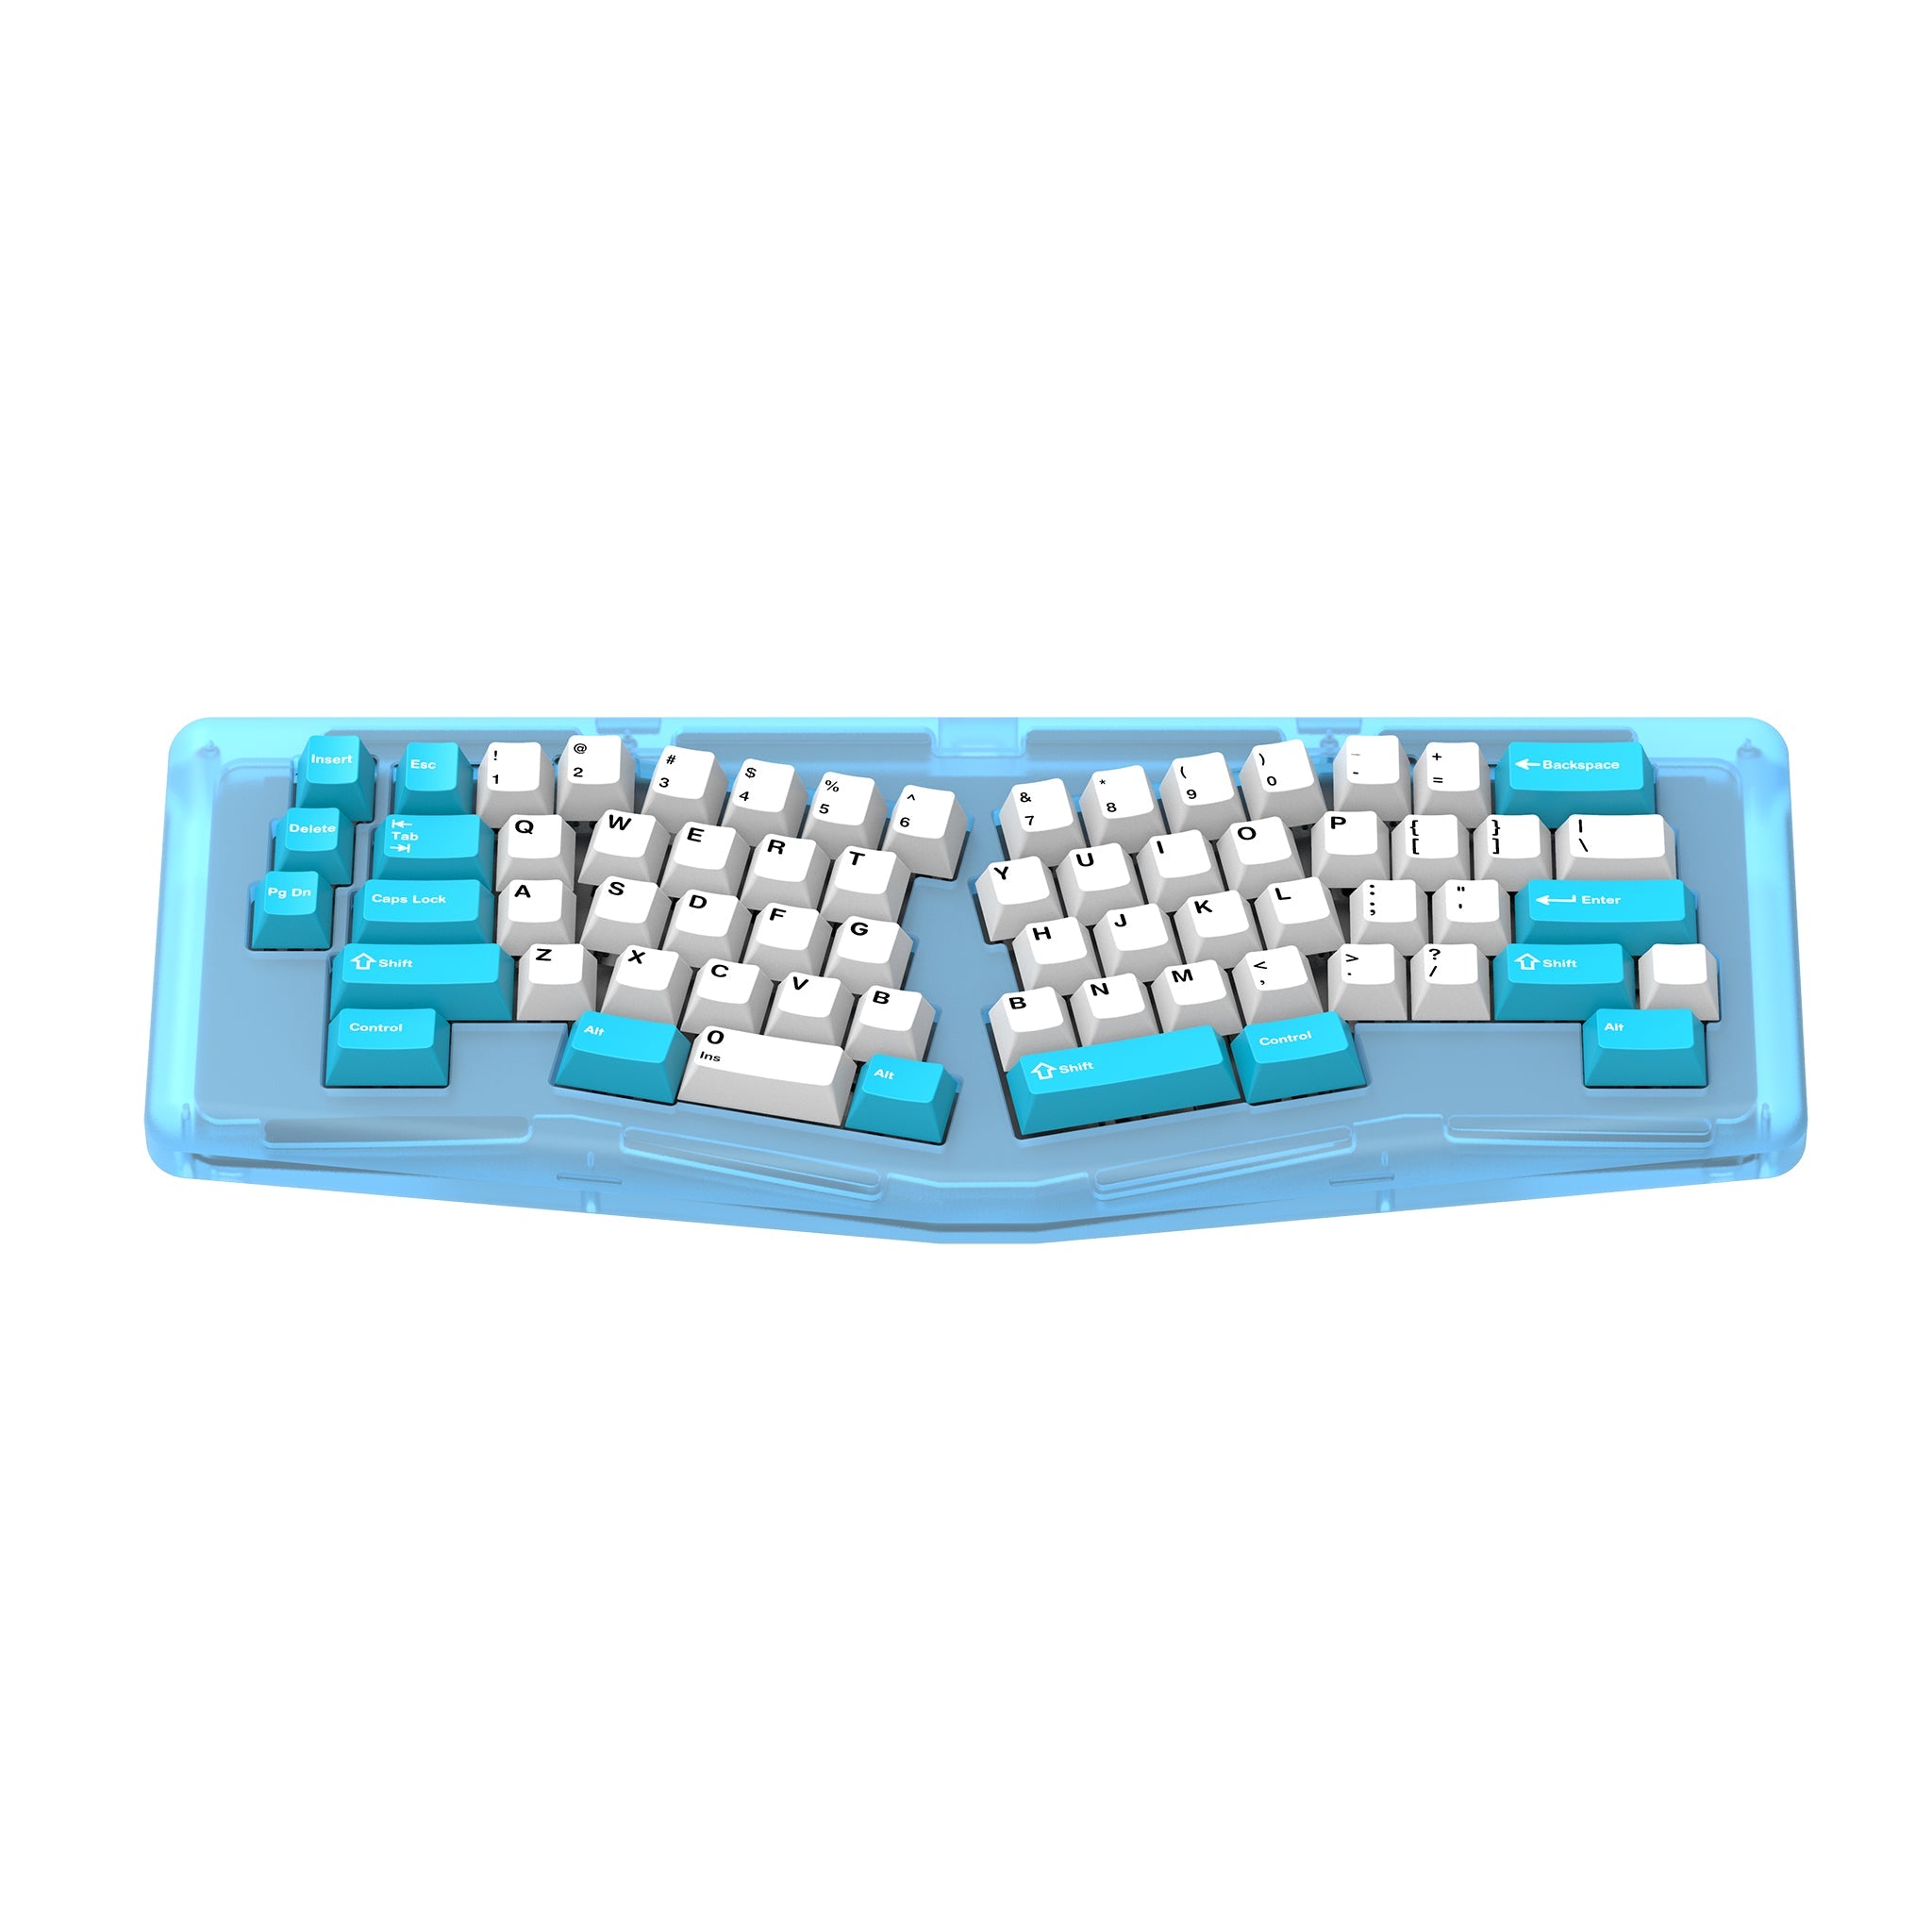 KBDfans Custom Keyboard [Restock] Axol Studio Yeti Mechanical Keyboard Kit